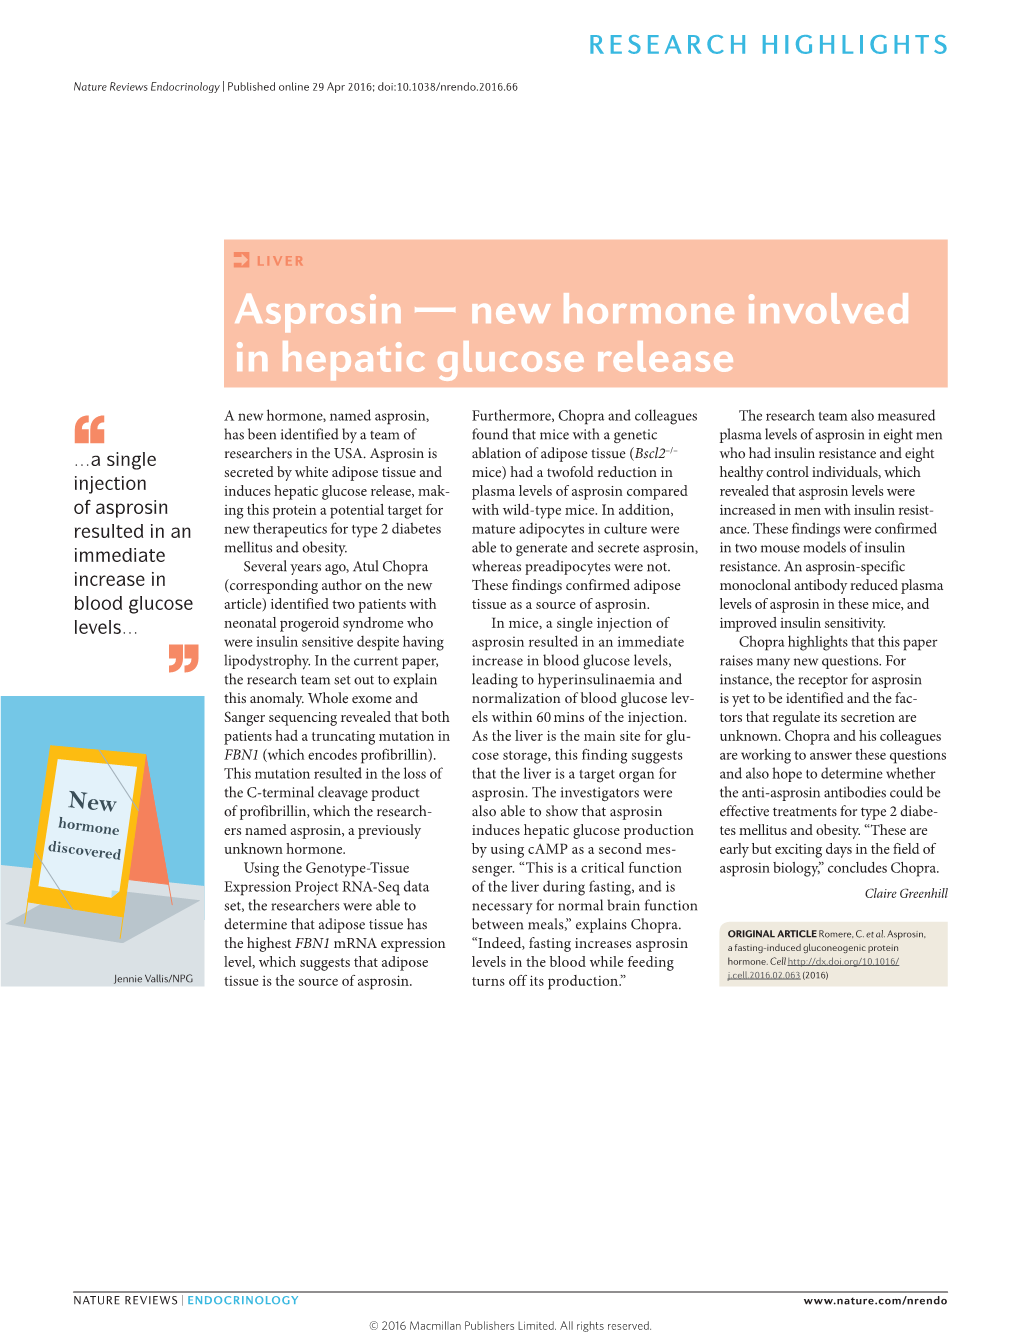 Asprosin — New Hormone Involved in Hepatic Glucose Release